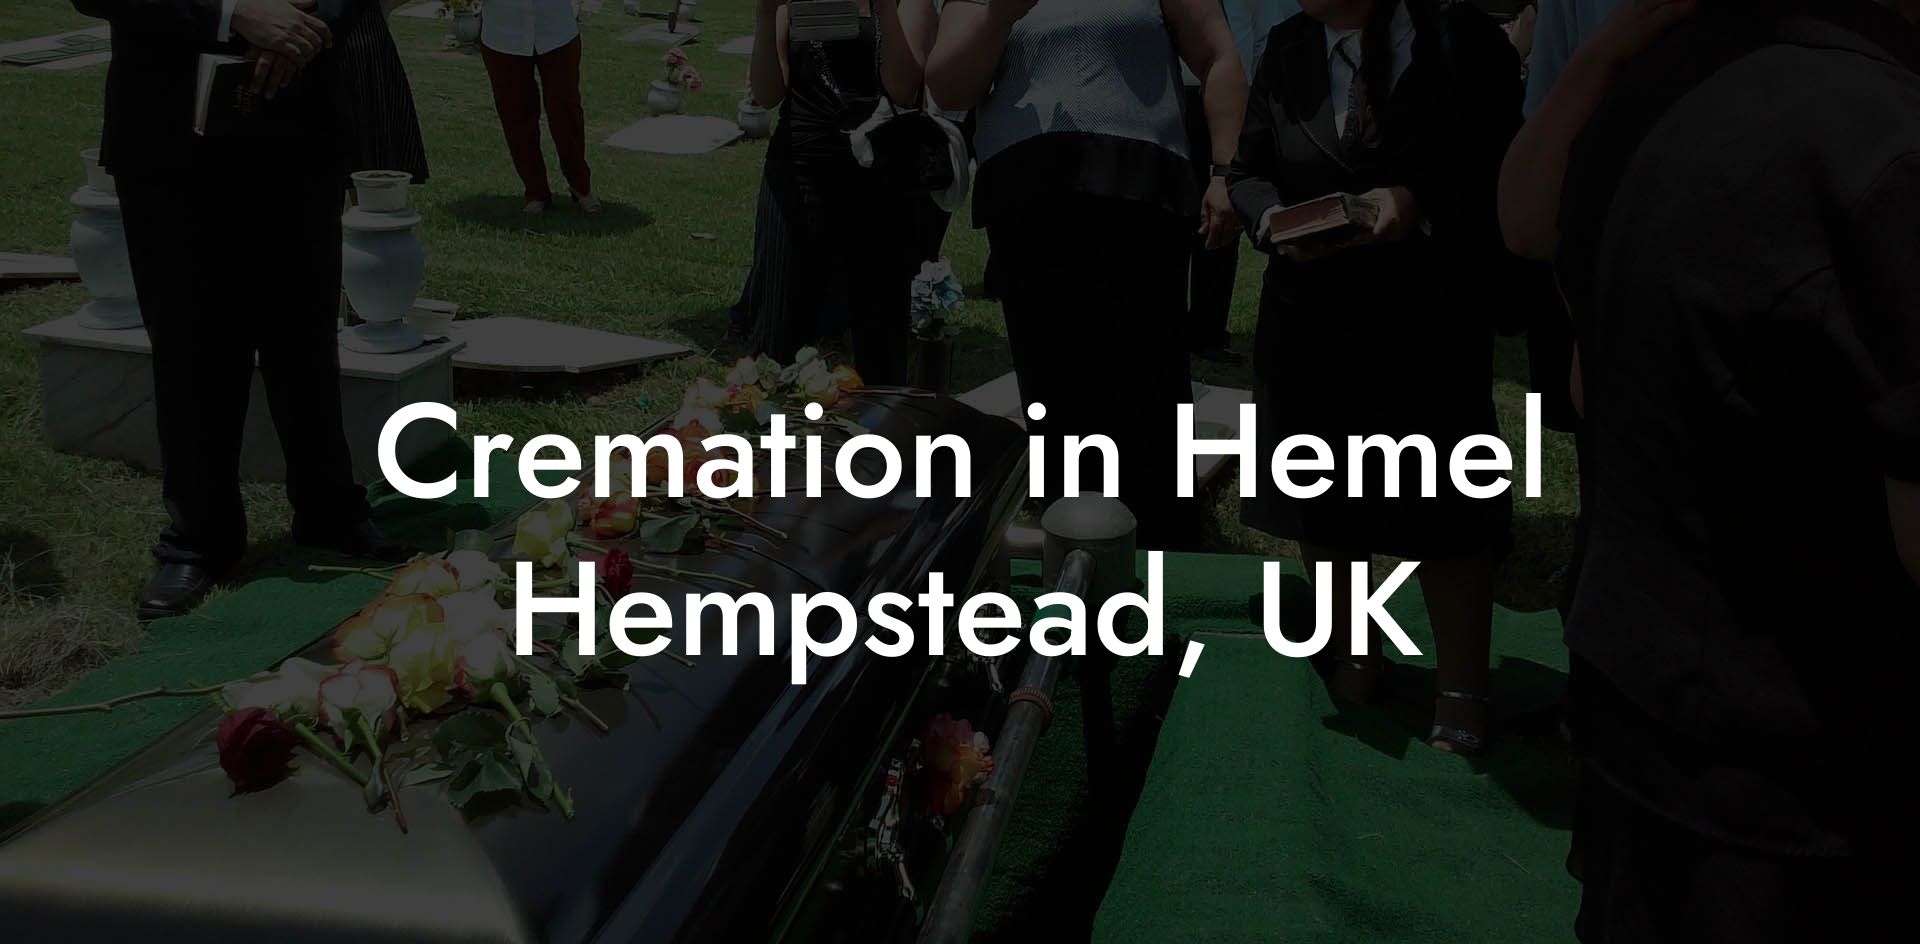 Cremation in Hemel Hempstead, UK